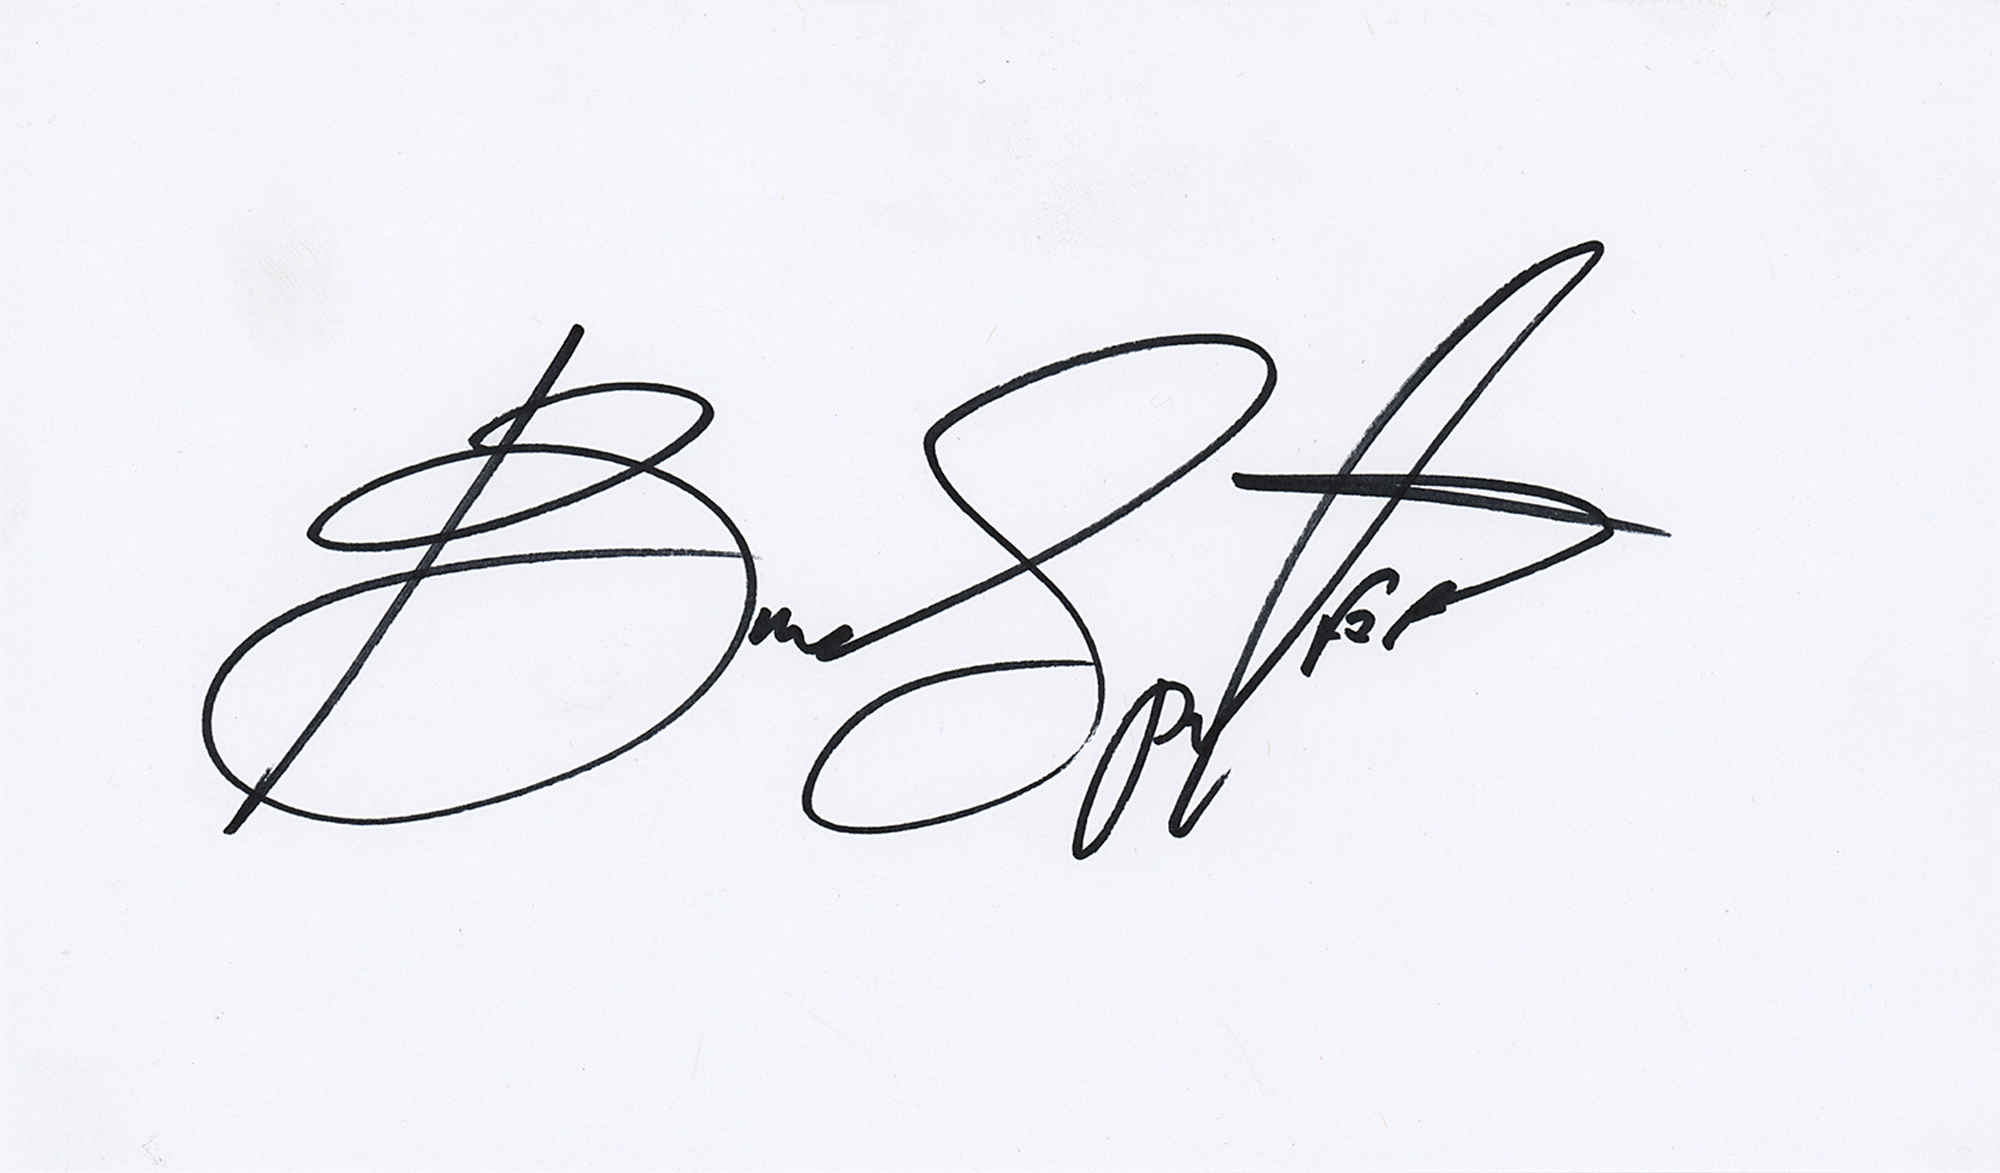 Lot #600 Bruce Springsteen Signature